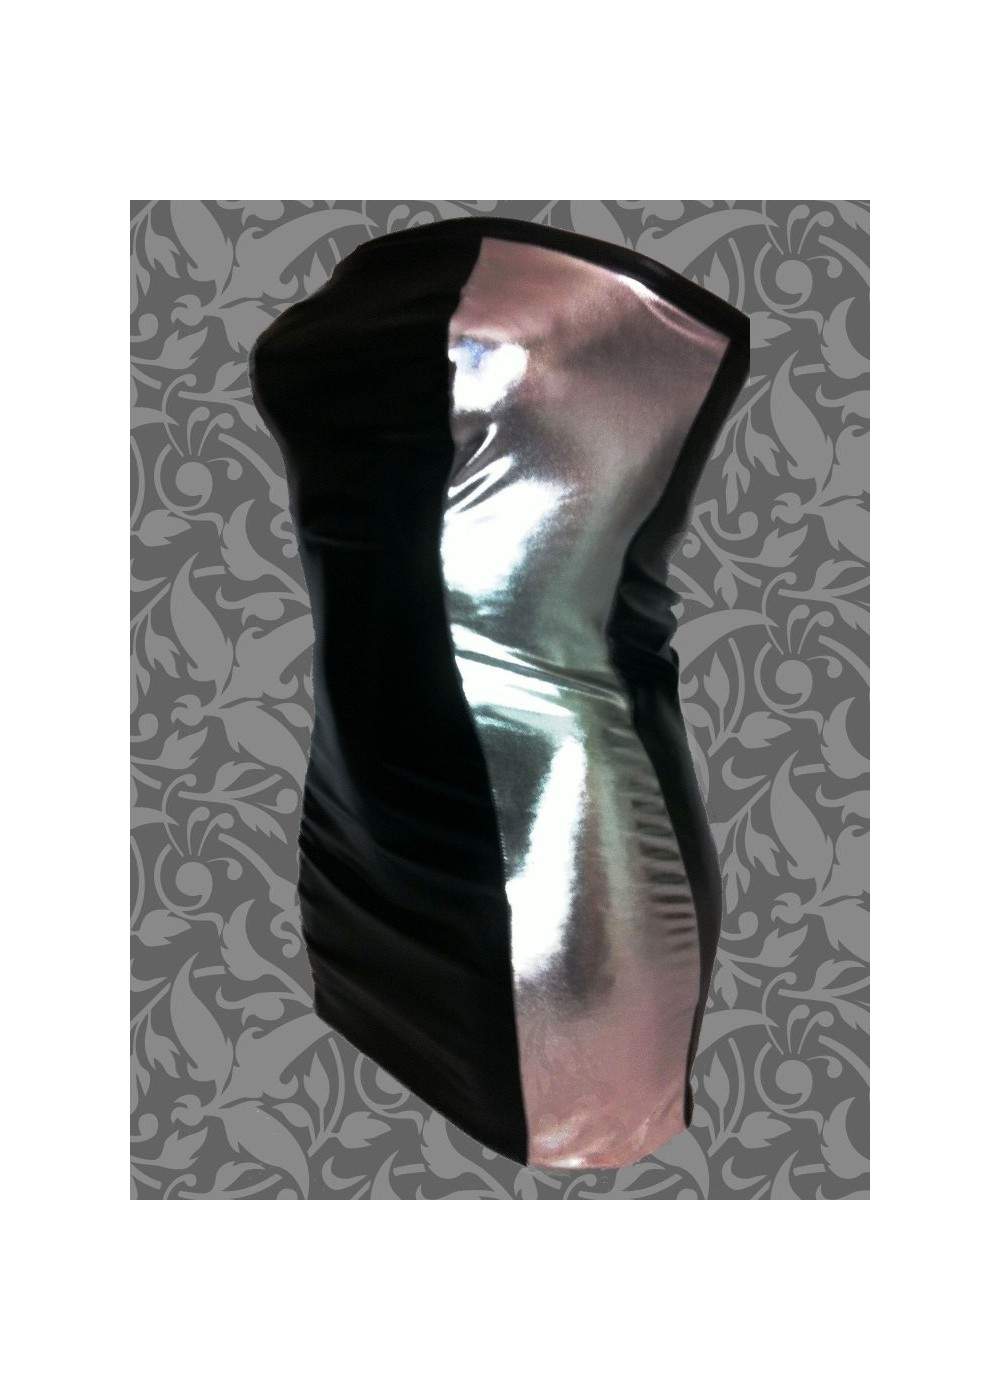 Leder-Optik Große Größen BANDEAU-Kleid schwarz silber - 